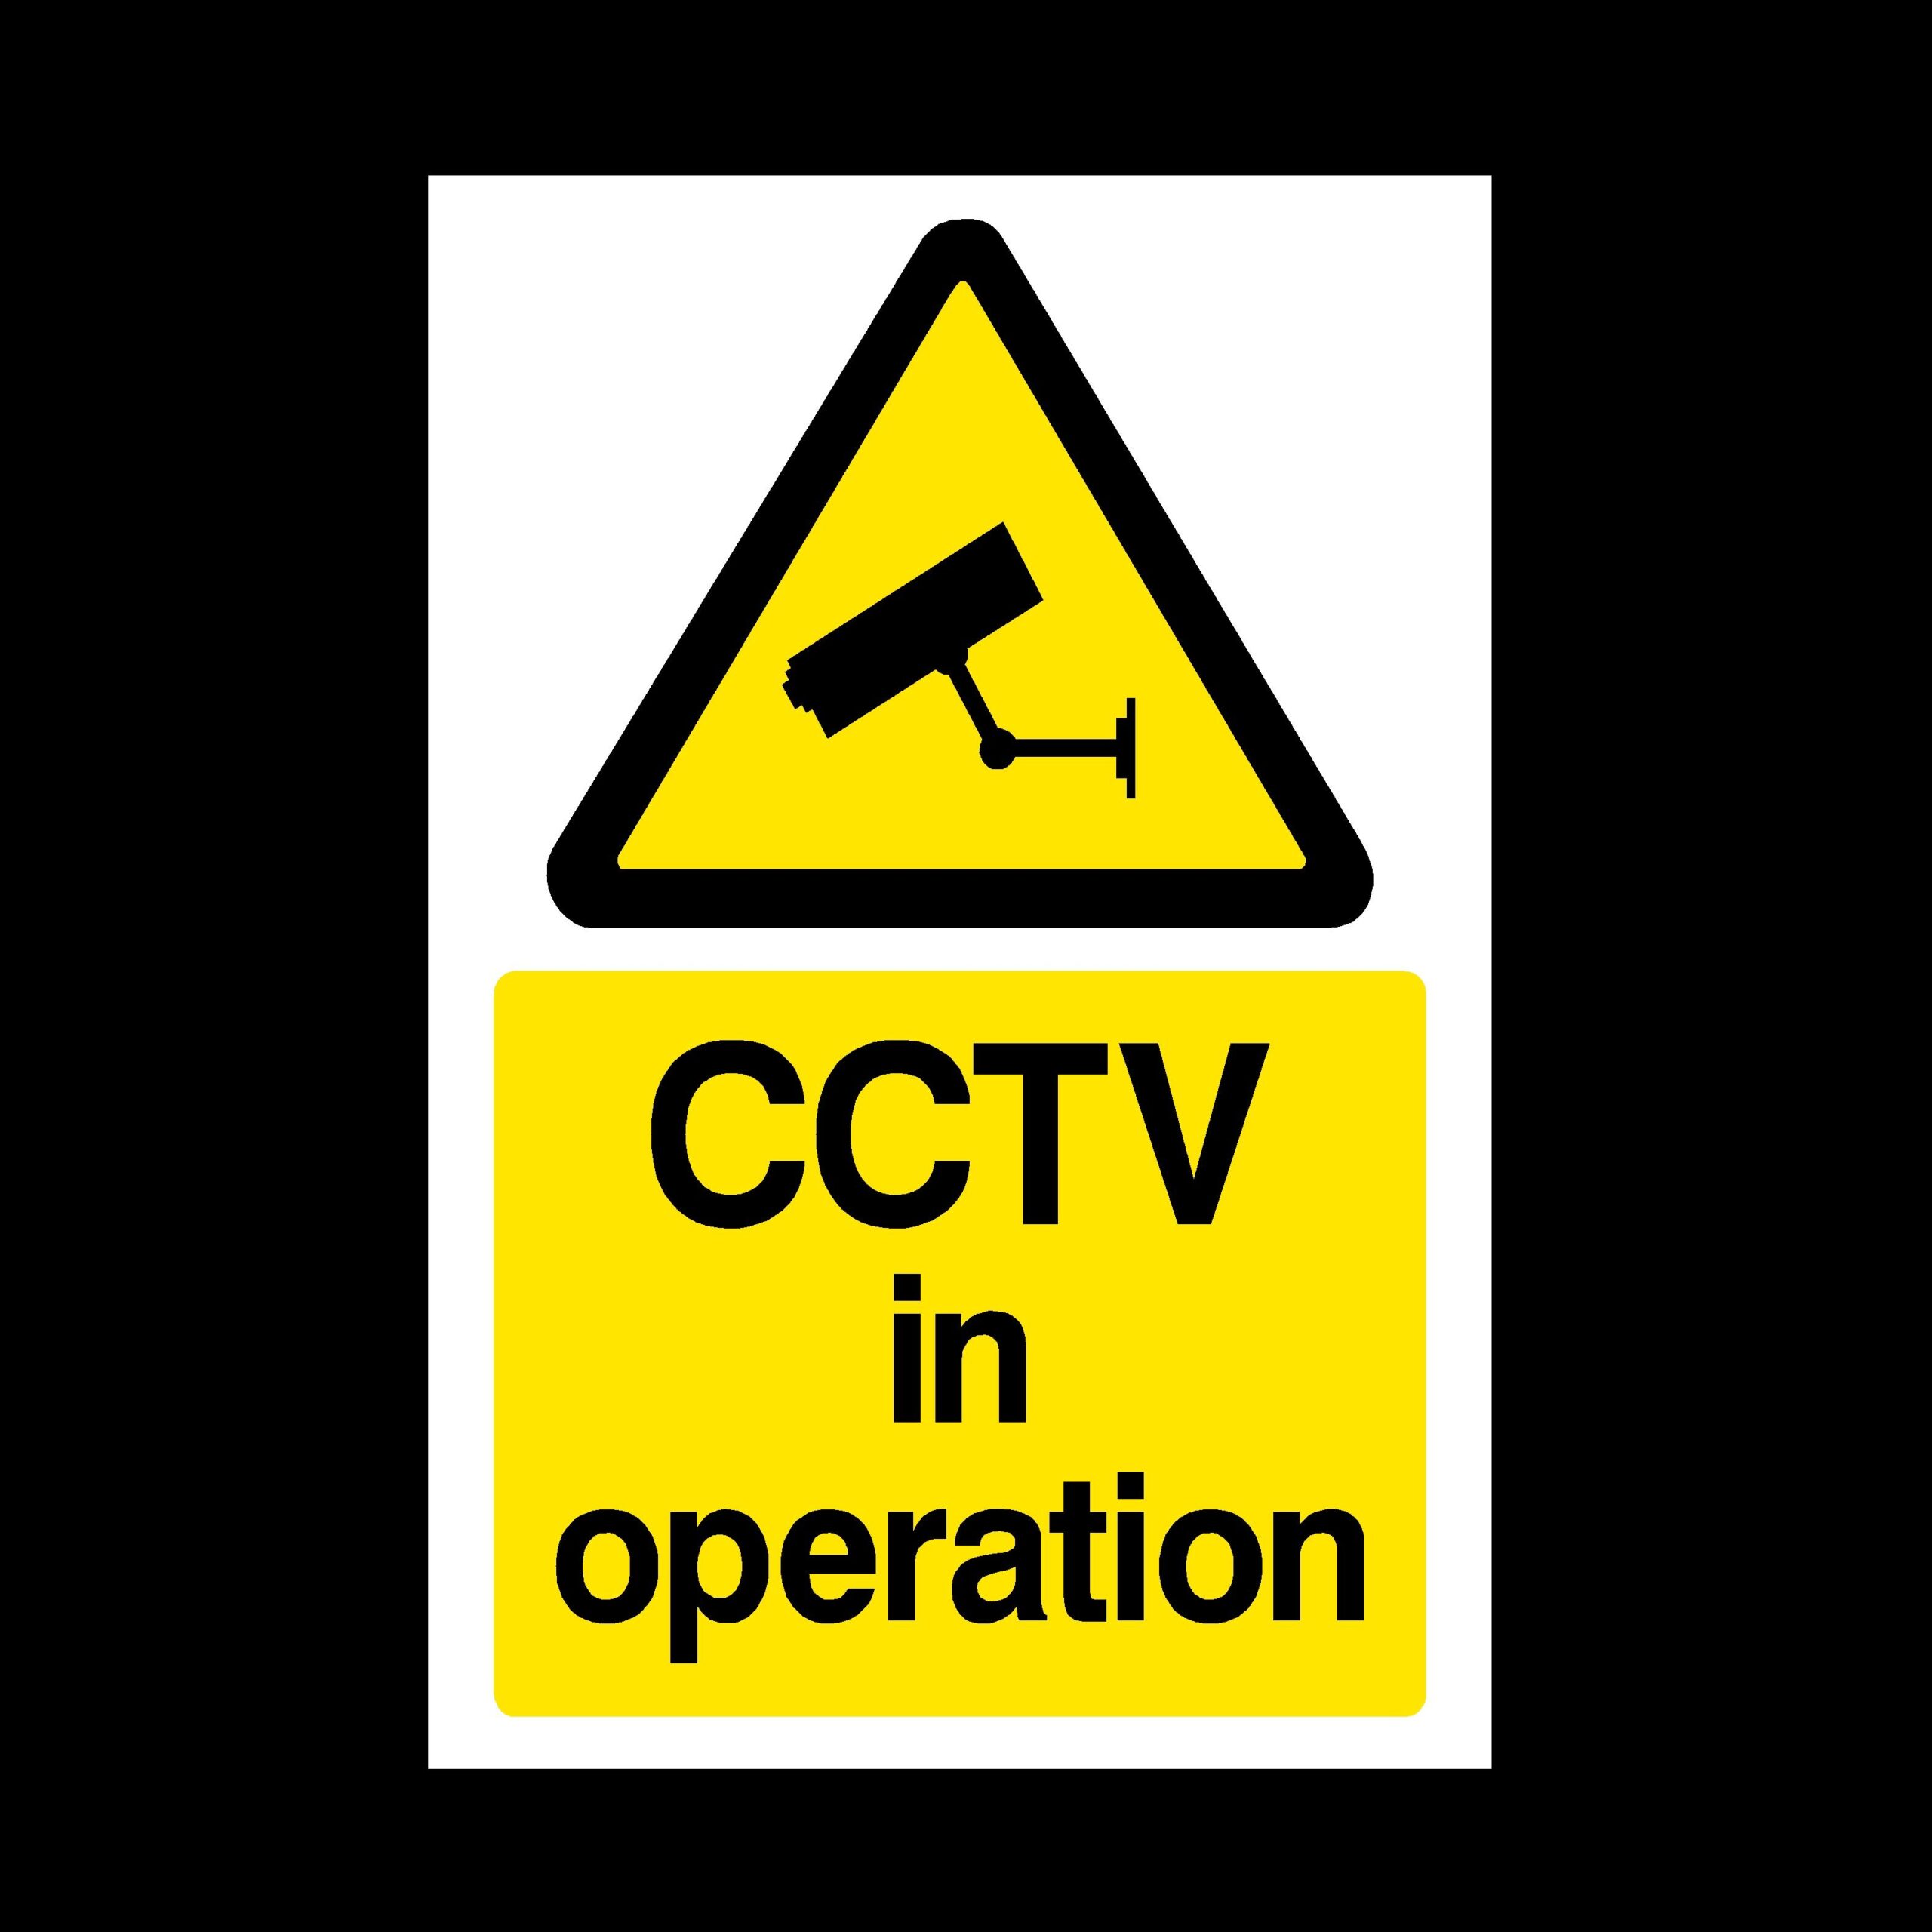 Kidsgrove CCTV is installed